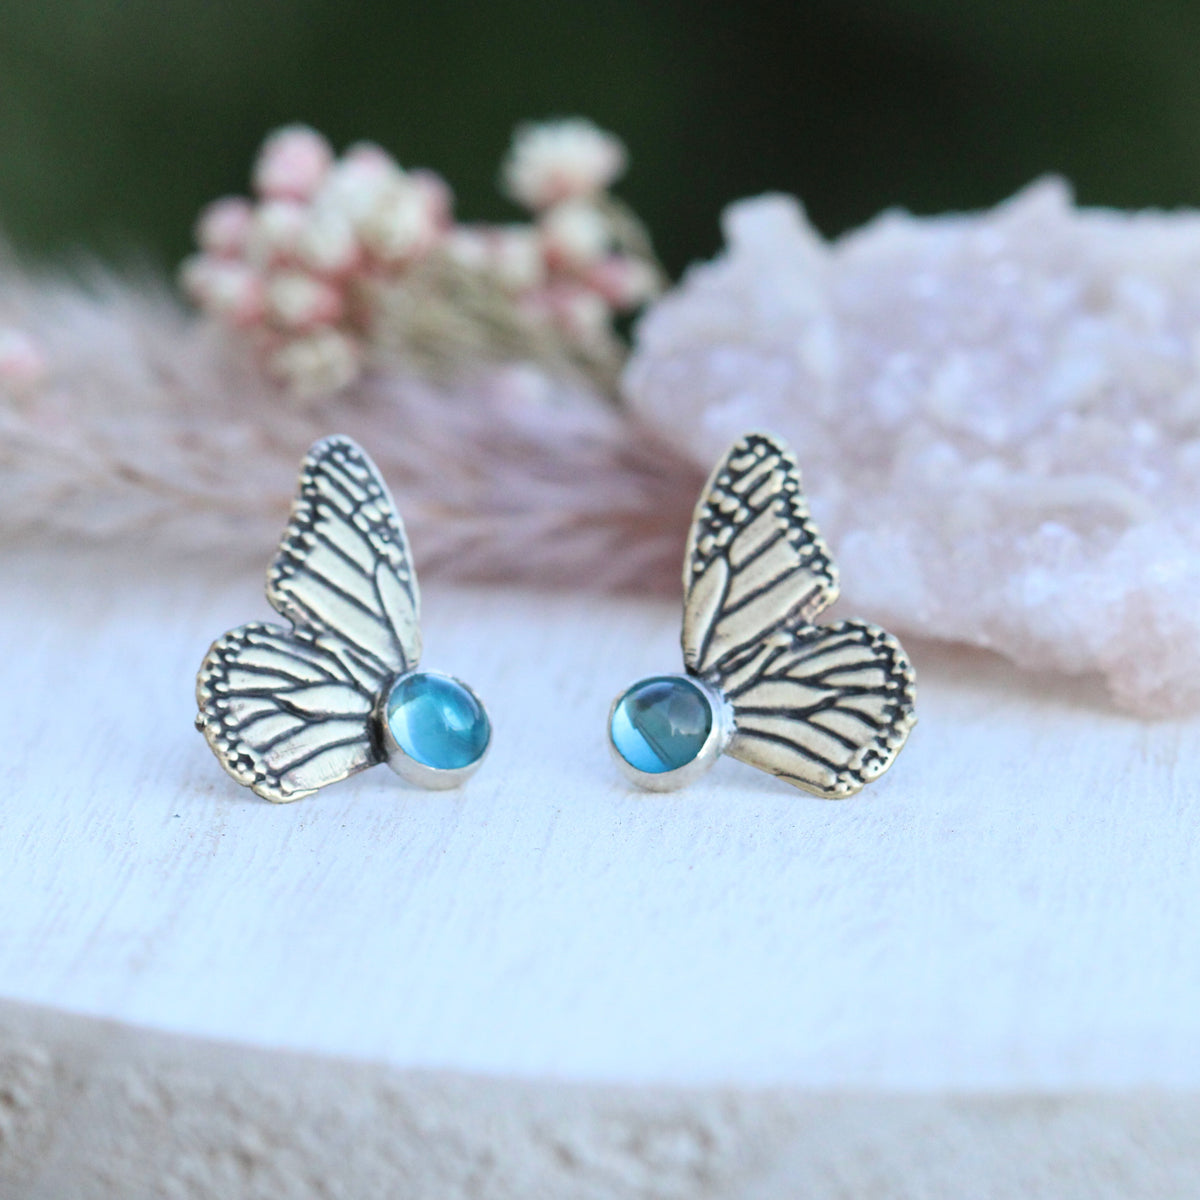 Monarch Butterfly post earrings with blue topaz